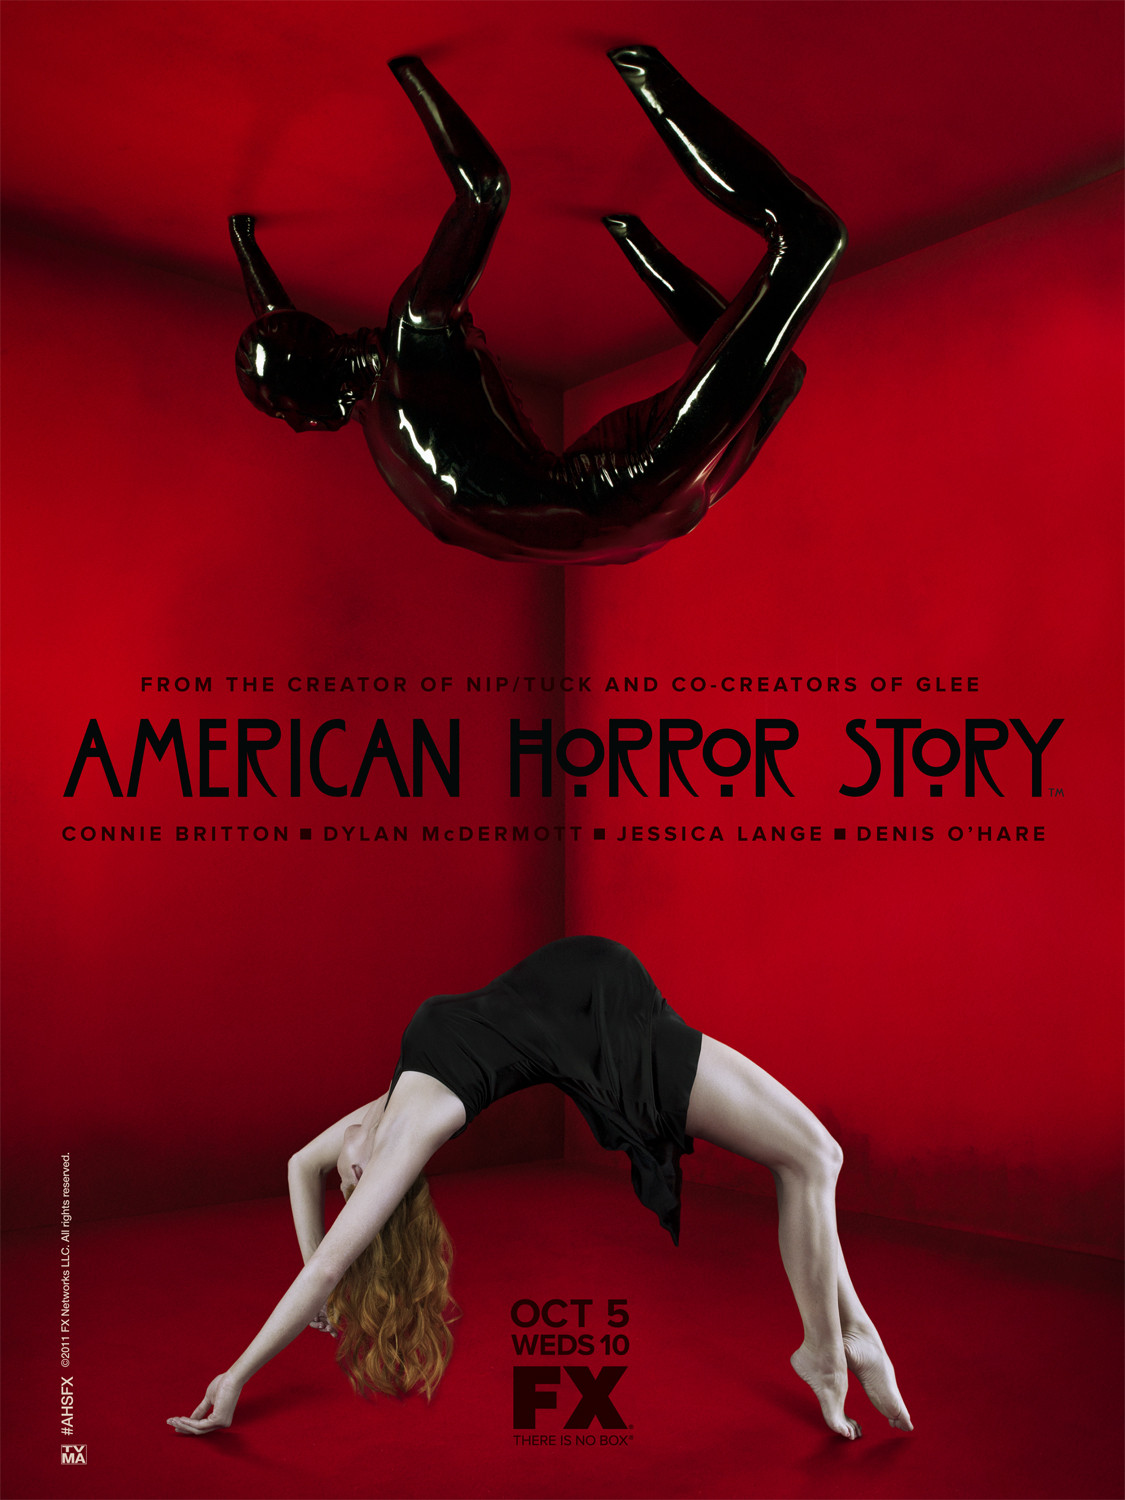 American Horror Story - Season 1 - New Promotional Poster - American Horror Story Season 1 Where To Watch